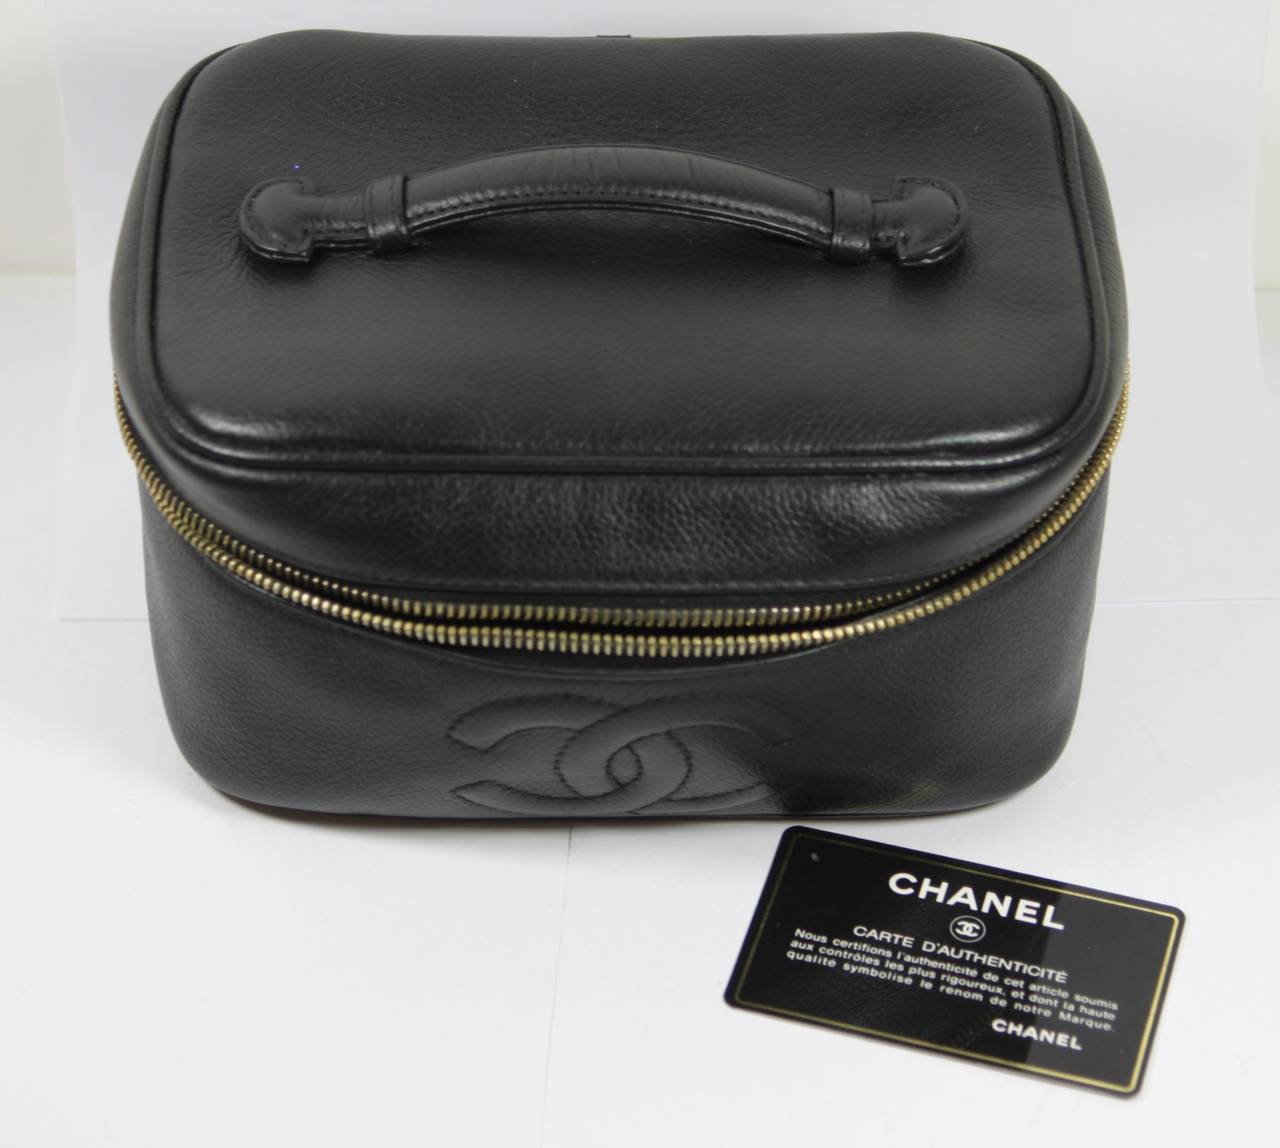 Chanel Black Caviar Make Up Case 4